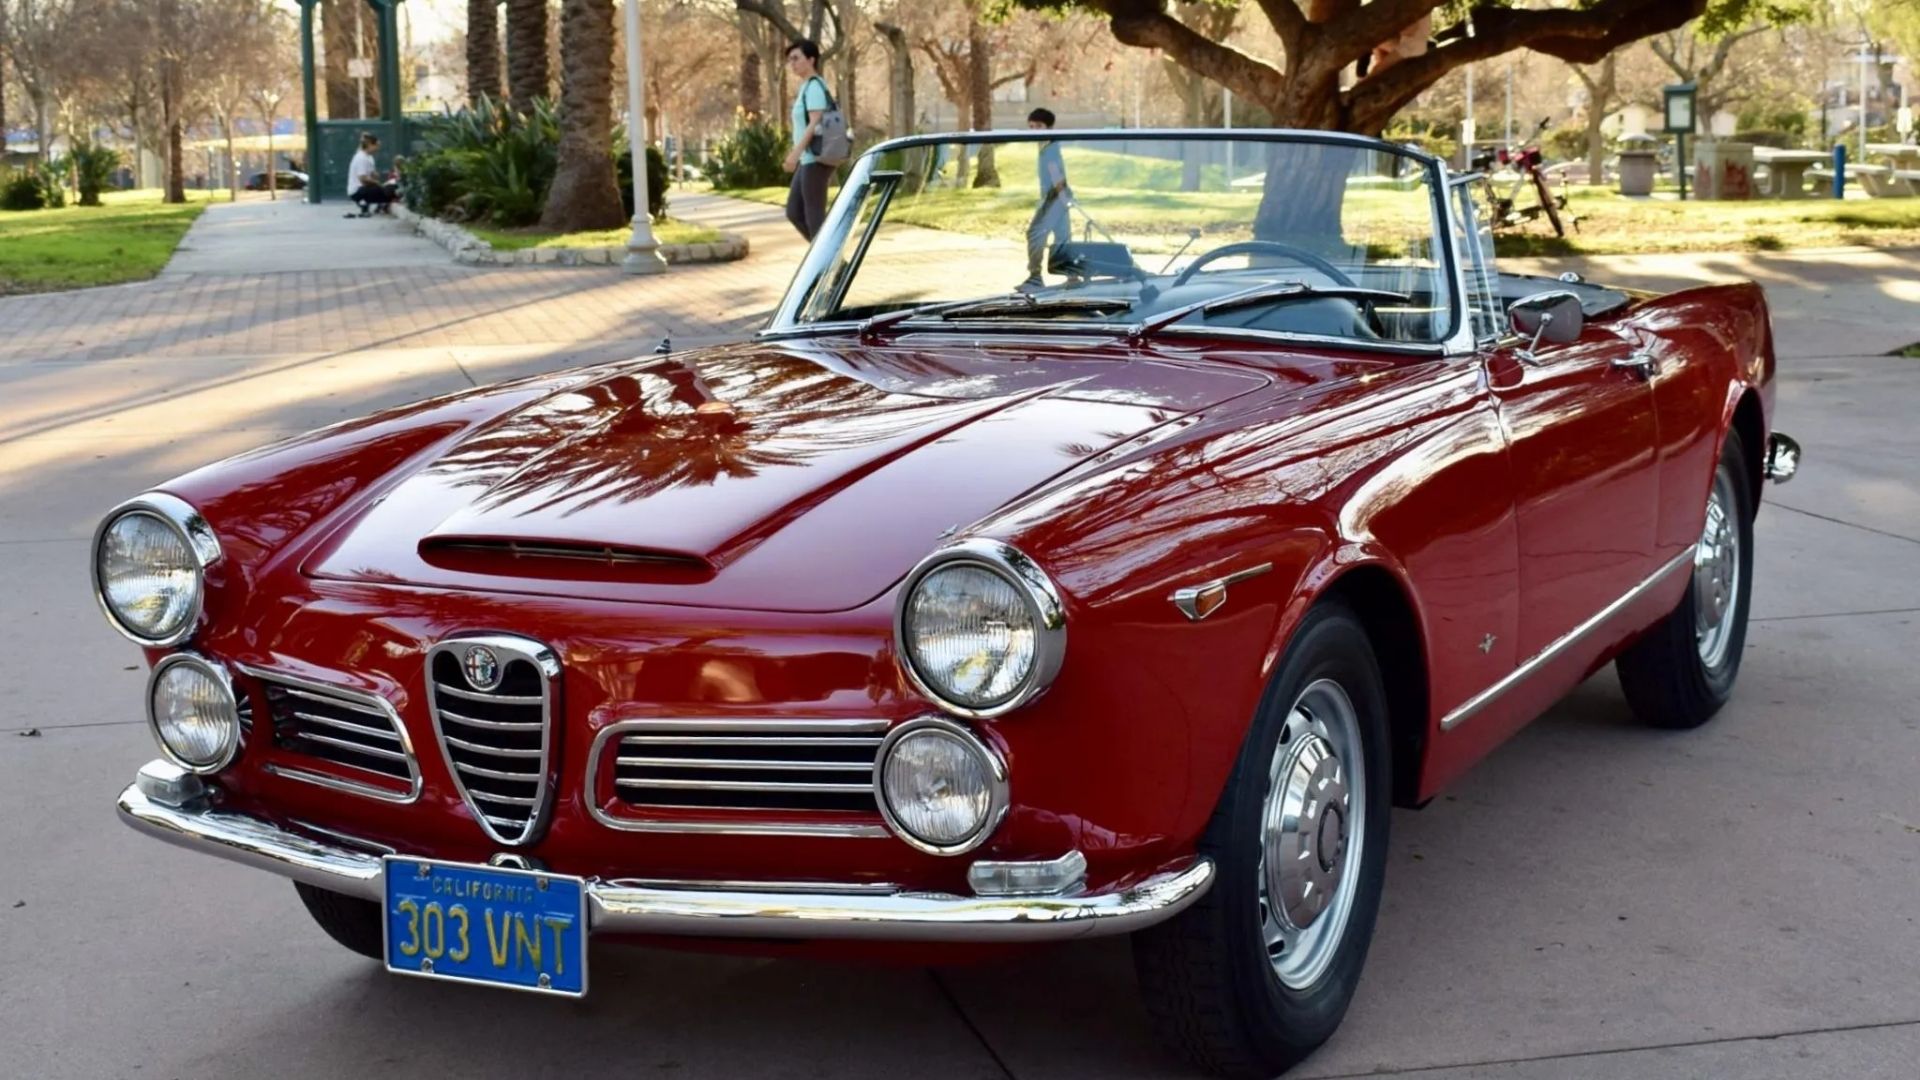 1964 Alfa Romeo 2600 - Last Alfa Romeo with an inline-six